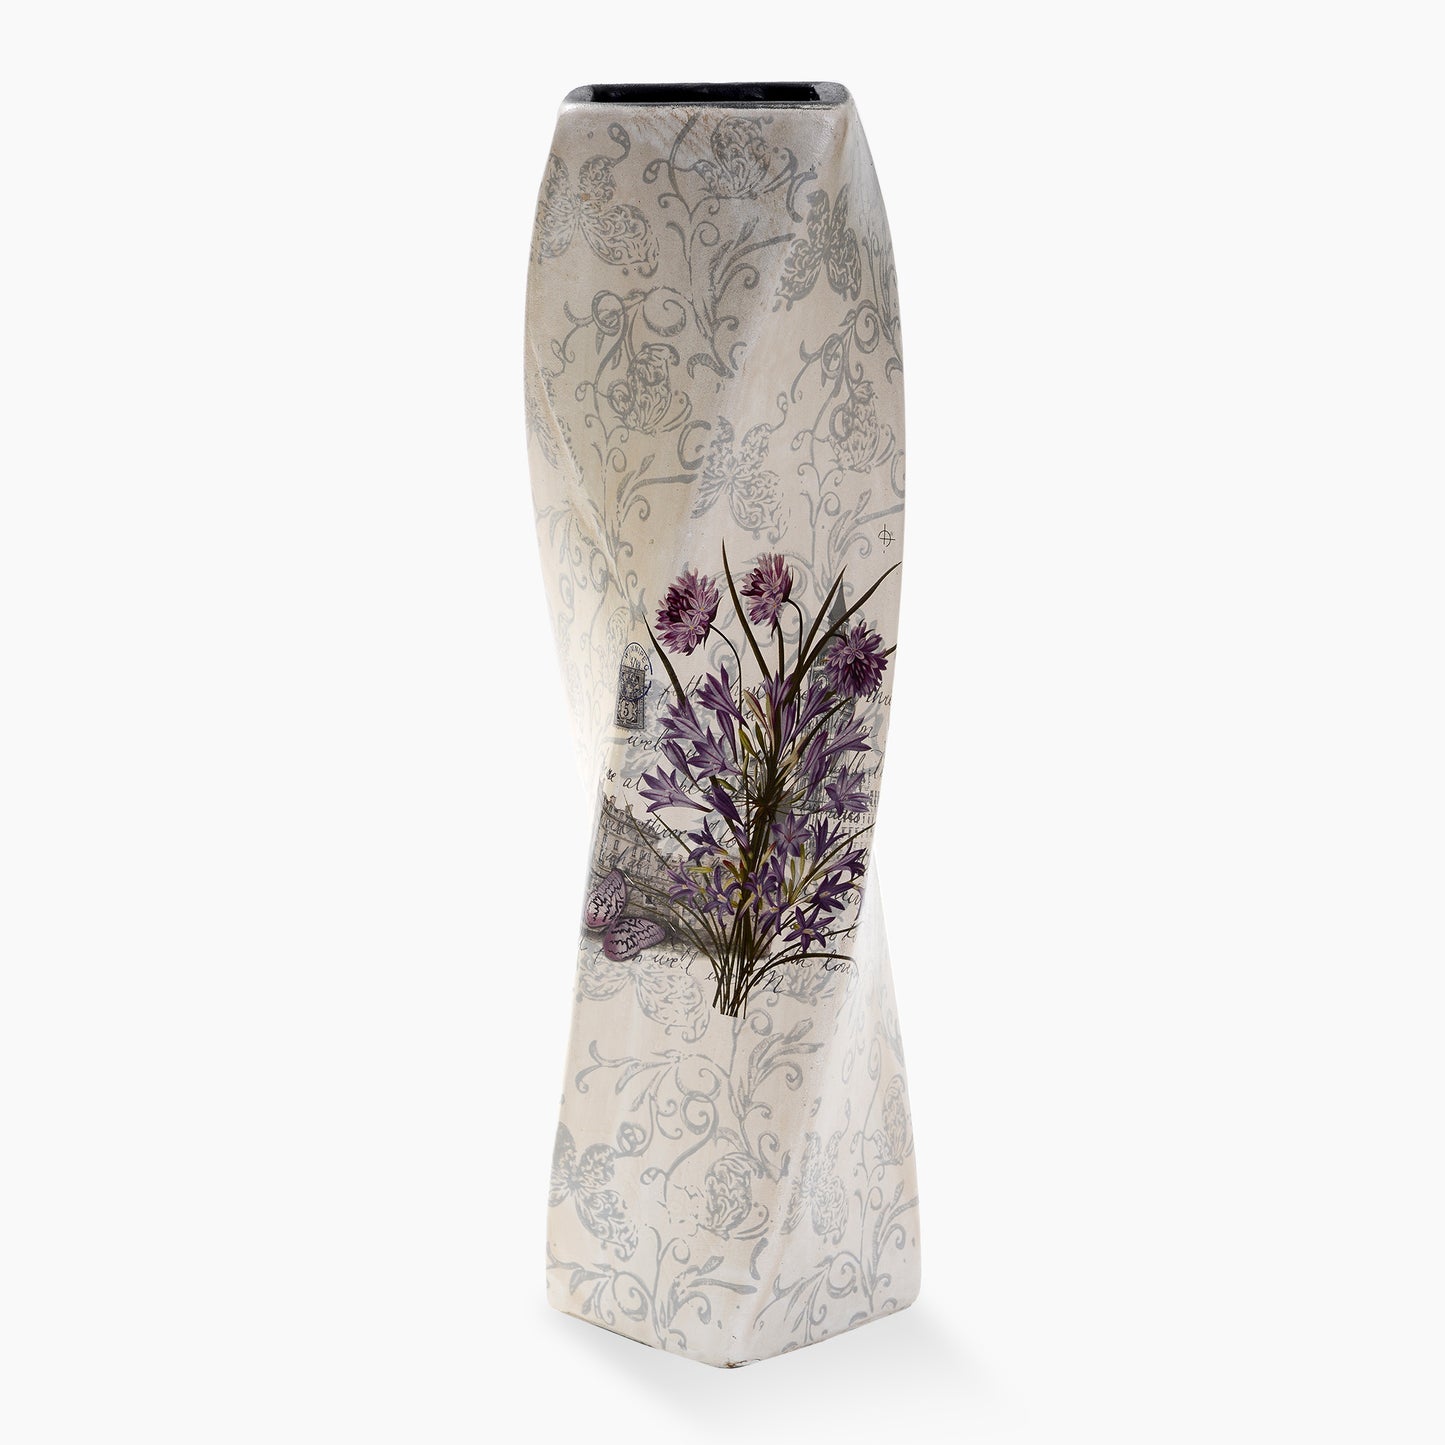 Beautiful twisted ceramic vase